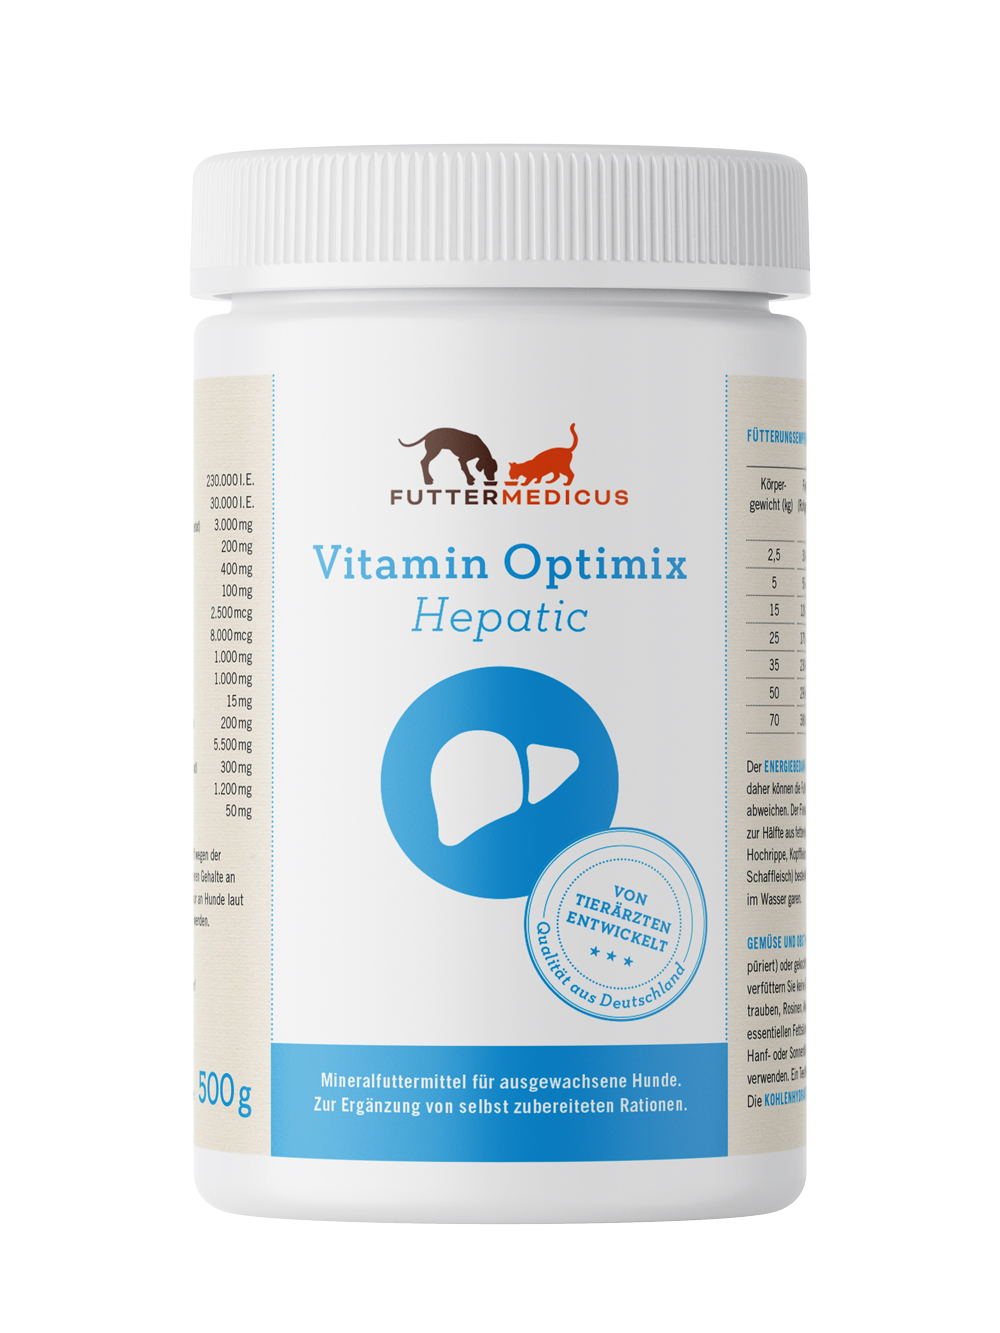  Vitamin Optimix Hepatic / Futtermedicus